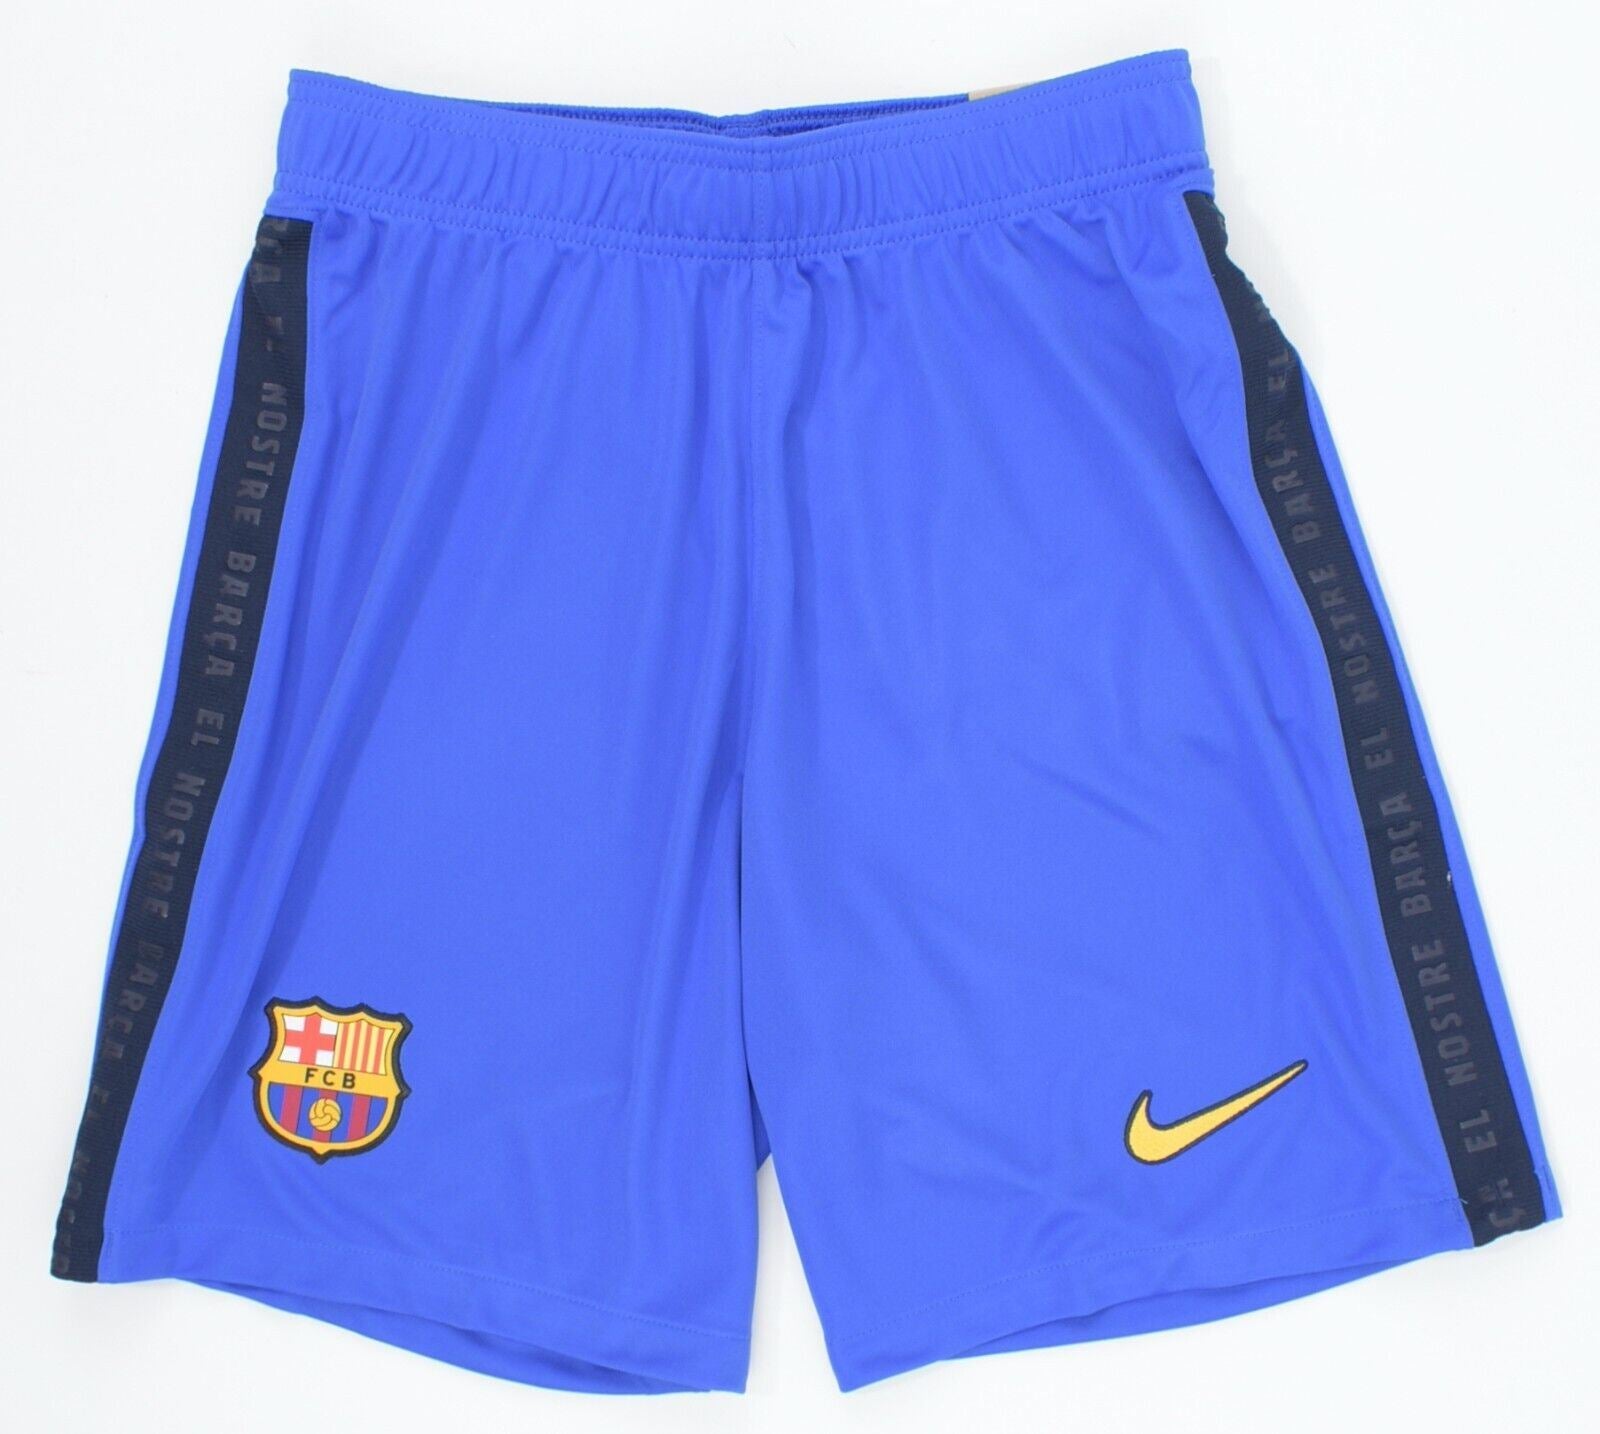 NIKE Men's F.C. Barcelona 2021/22 Stadium Third Football Shorts, Blue, size S